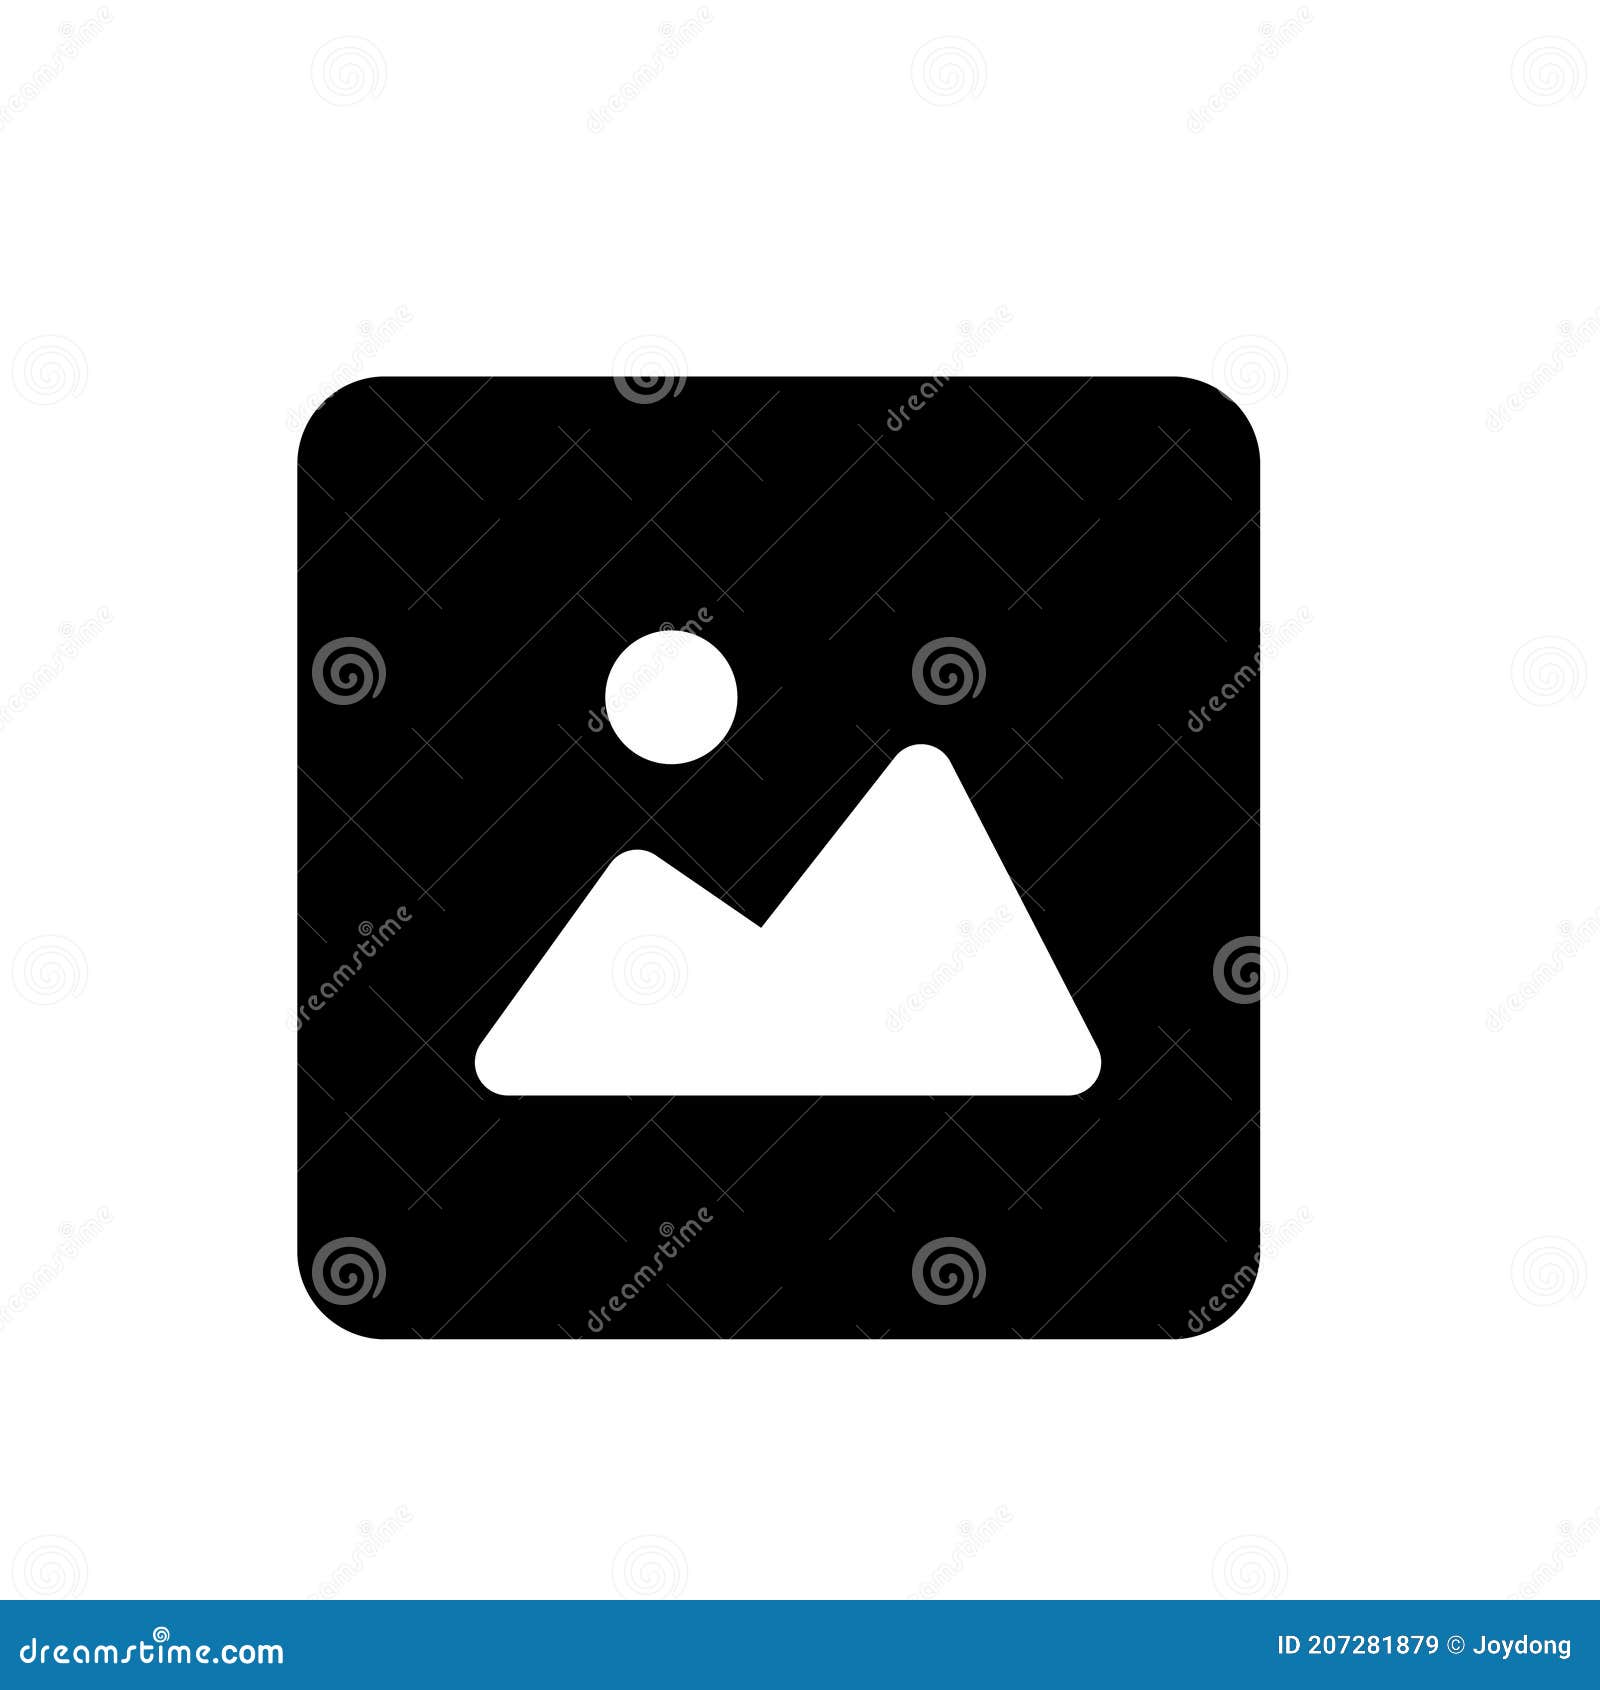  black image file type icon set